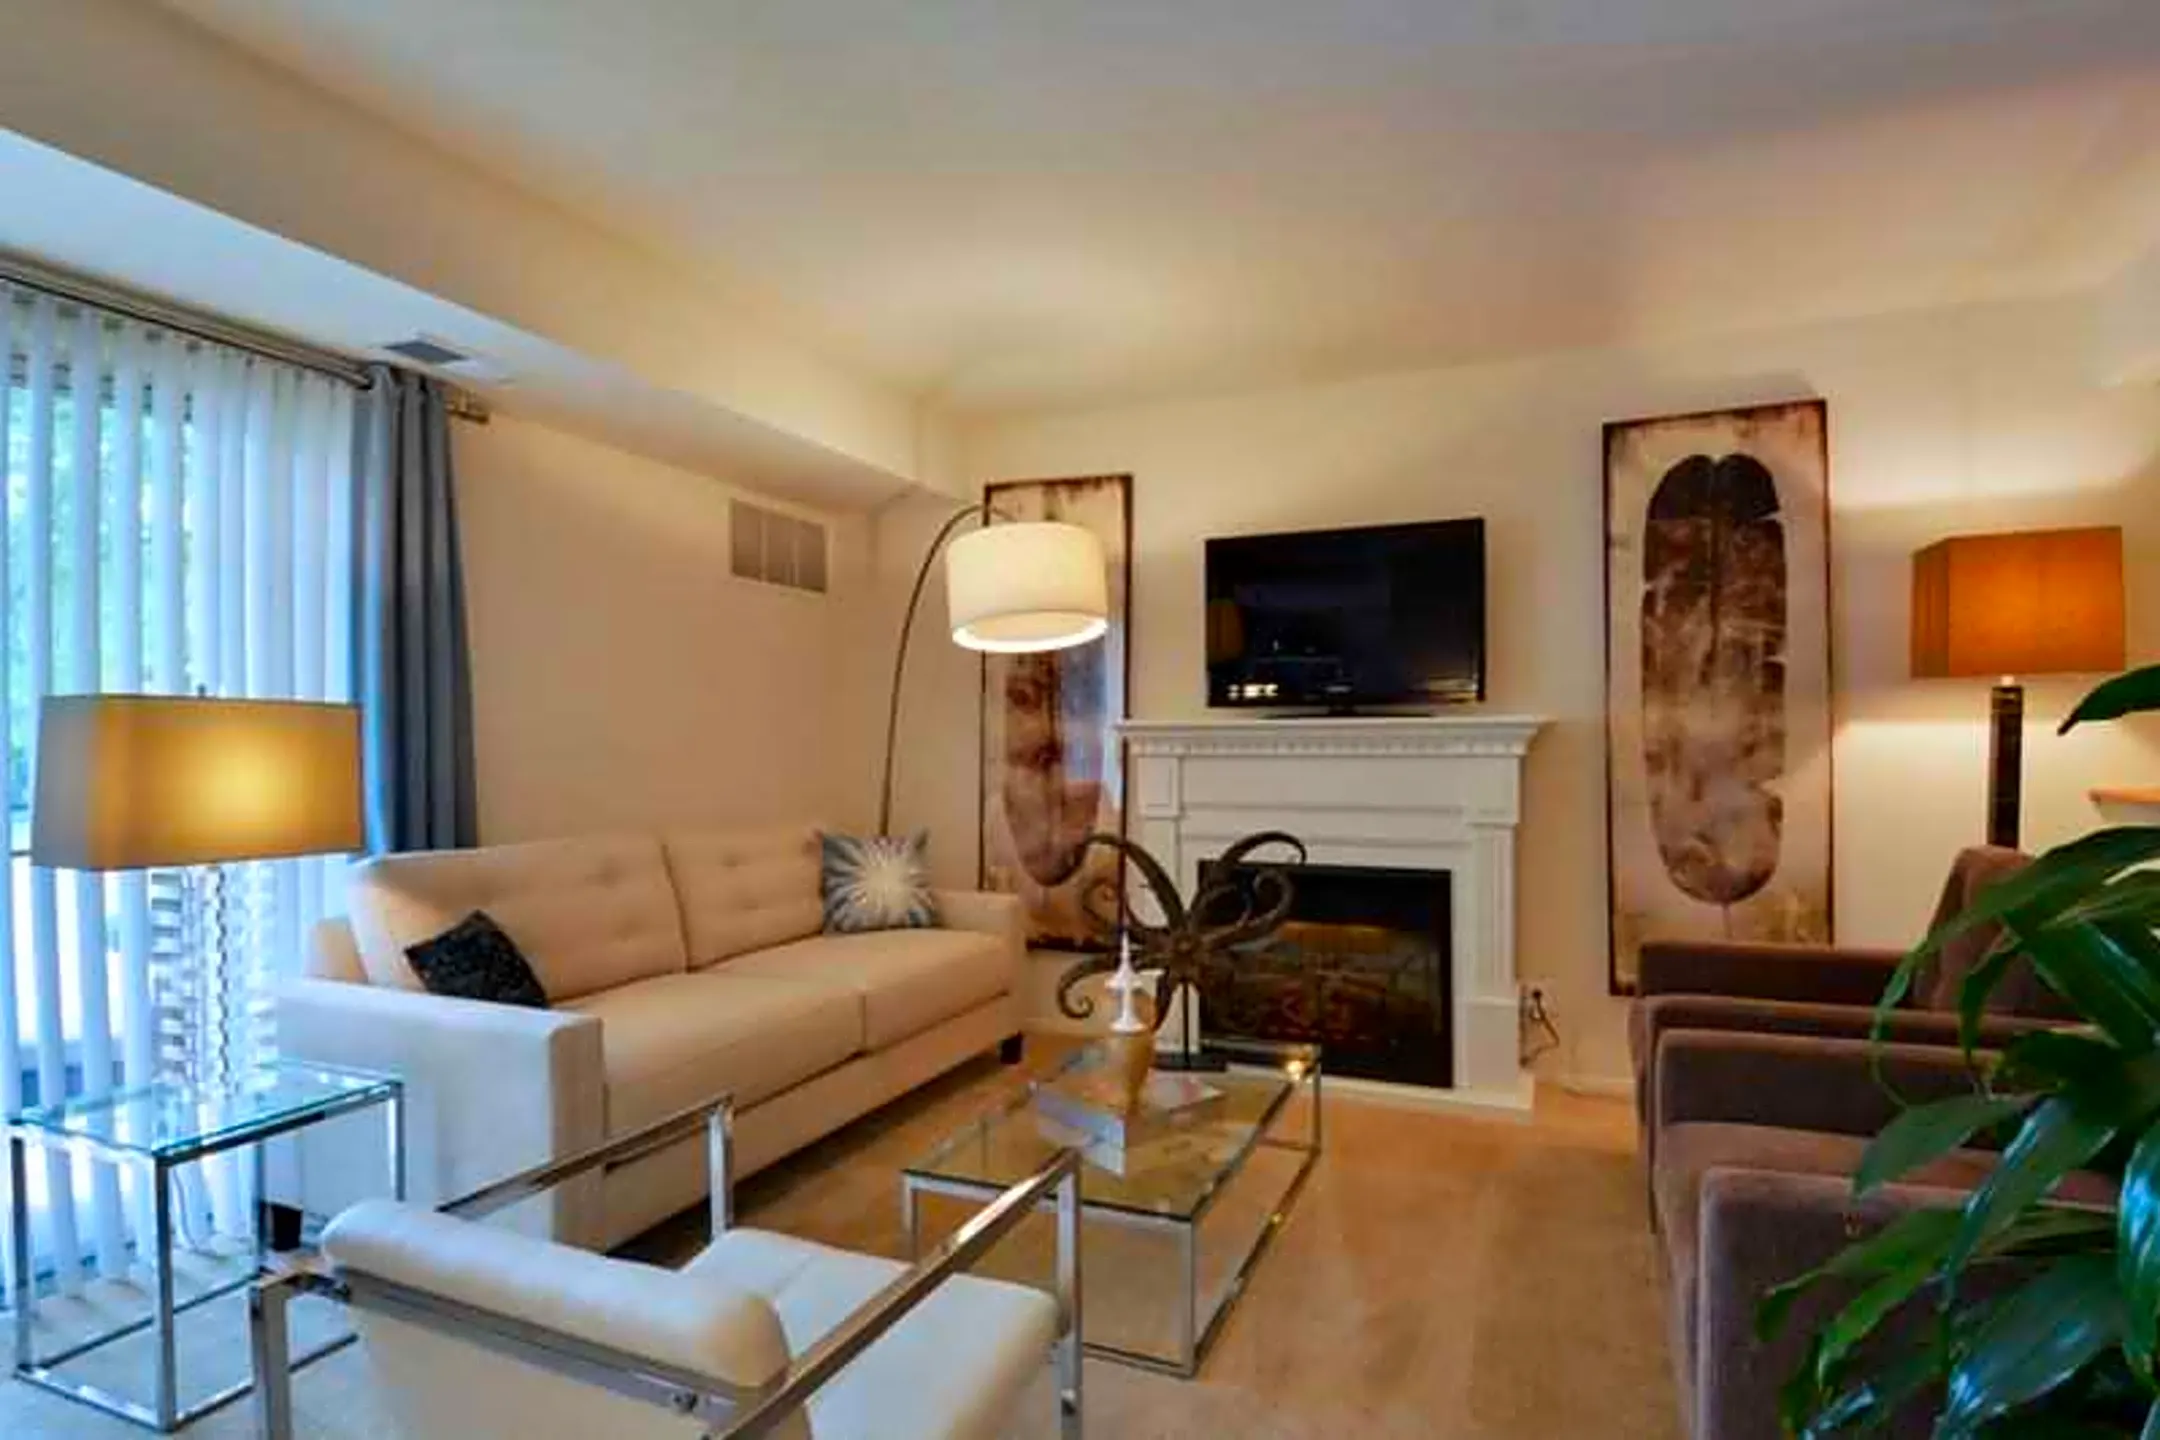 Living Room - Hickory Hills Condominiums - Bel Air, MD